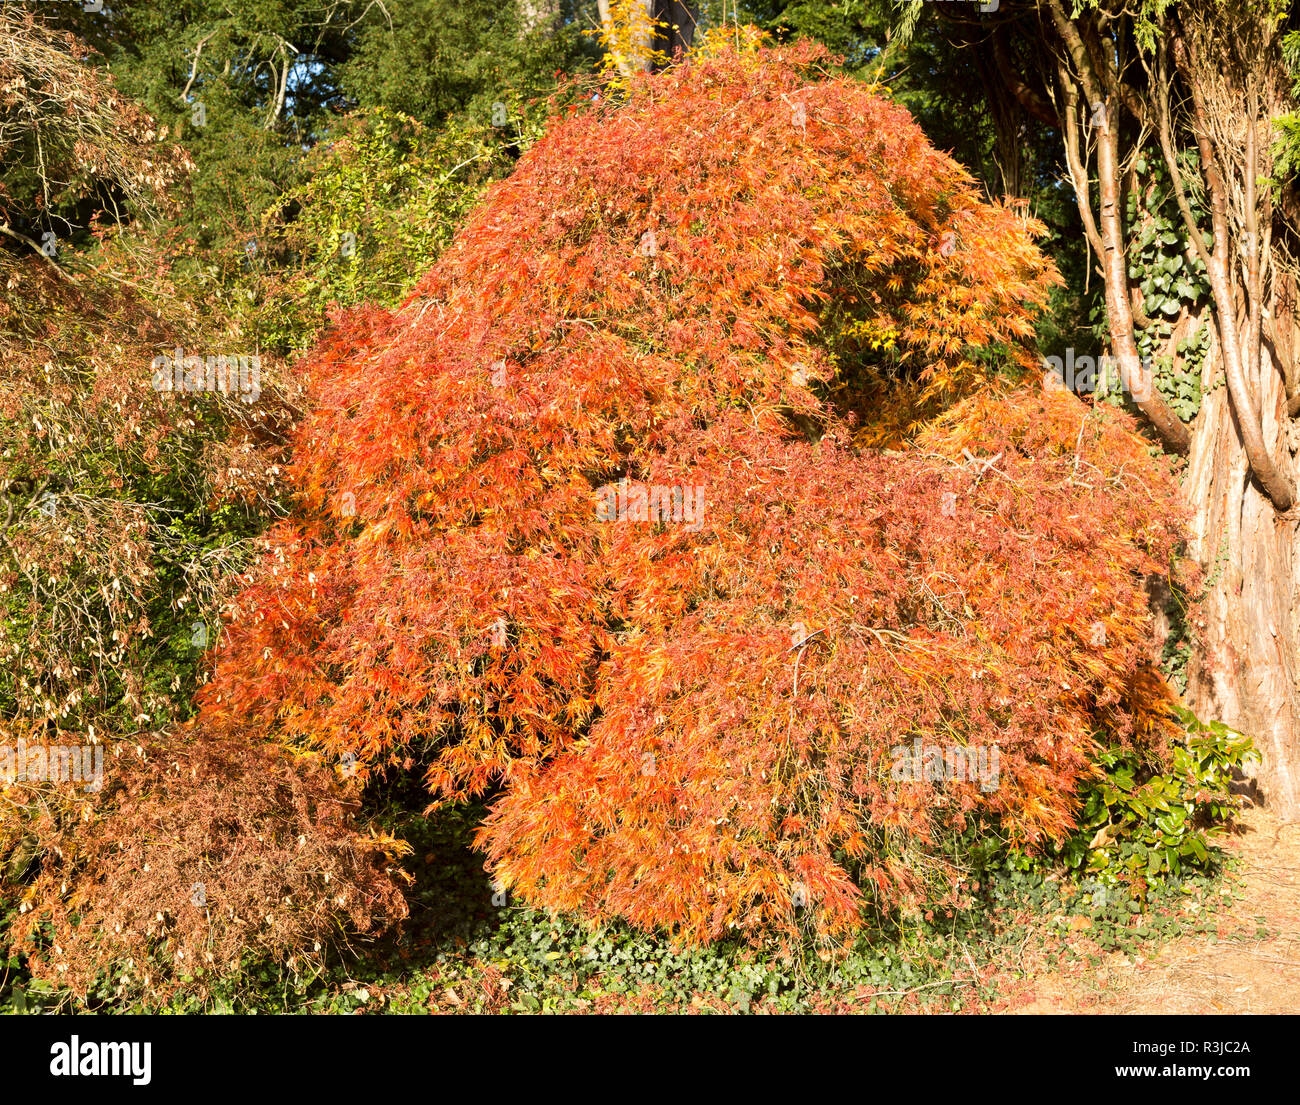 Japanese maple tree in autumn colour, Acer Palmatum, National arboretum, Westonbirt arboretum, Gloucestershire, England, UK Stock Photo